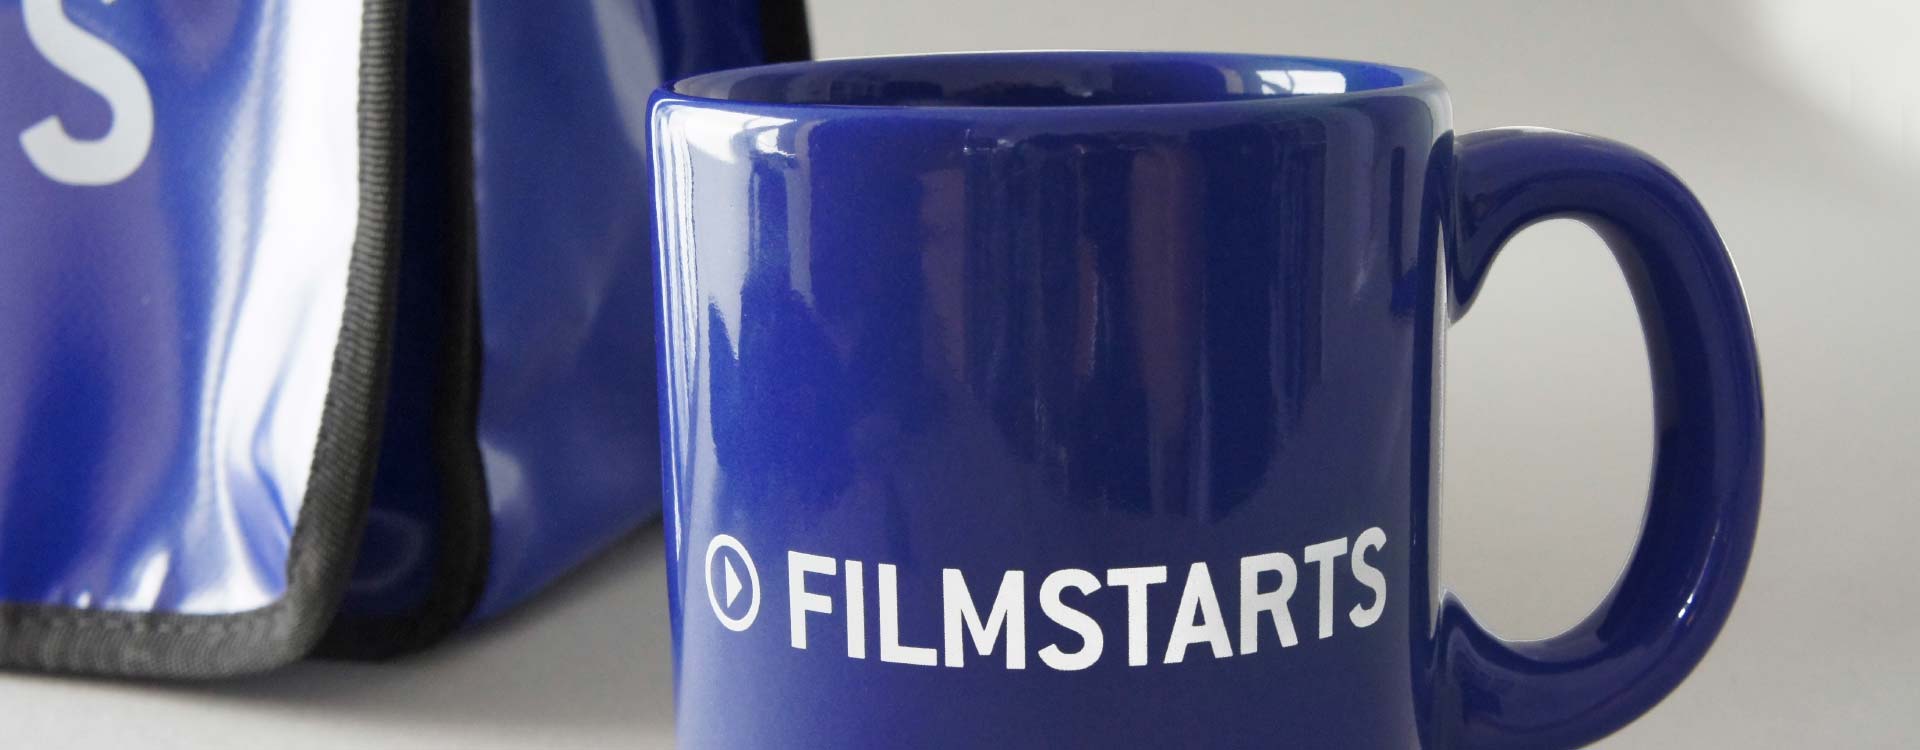 Tasse mit dem Logo Filmstarts